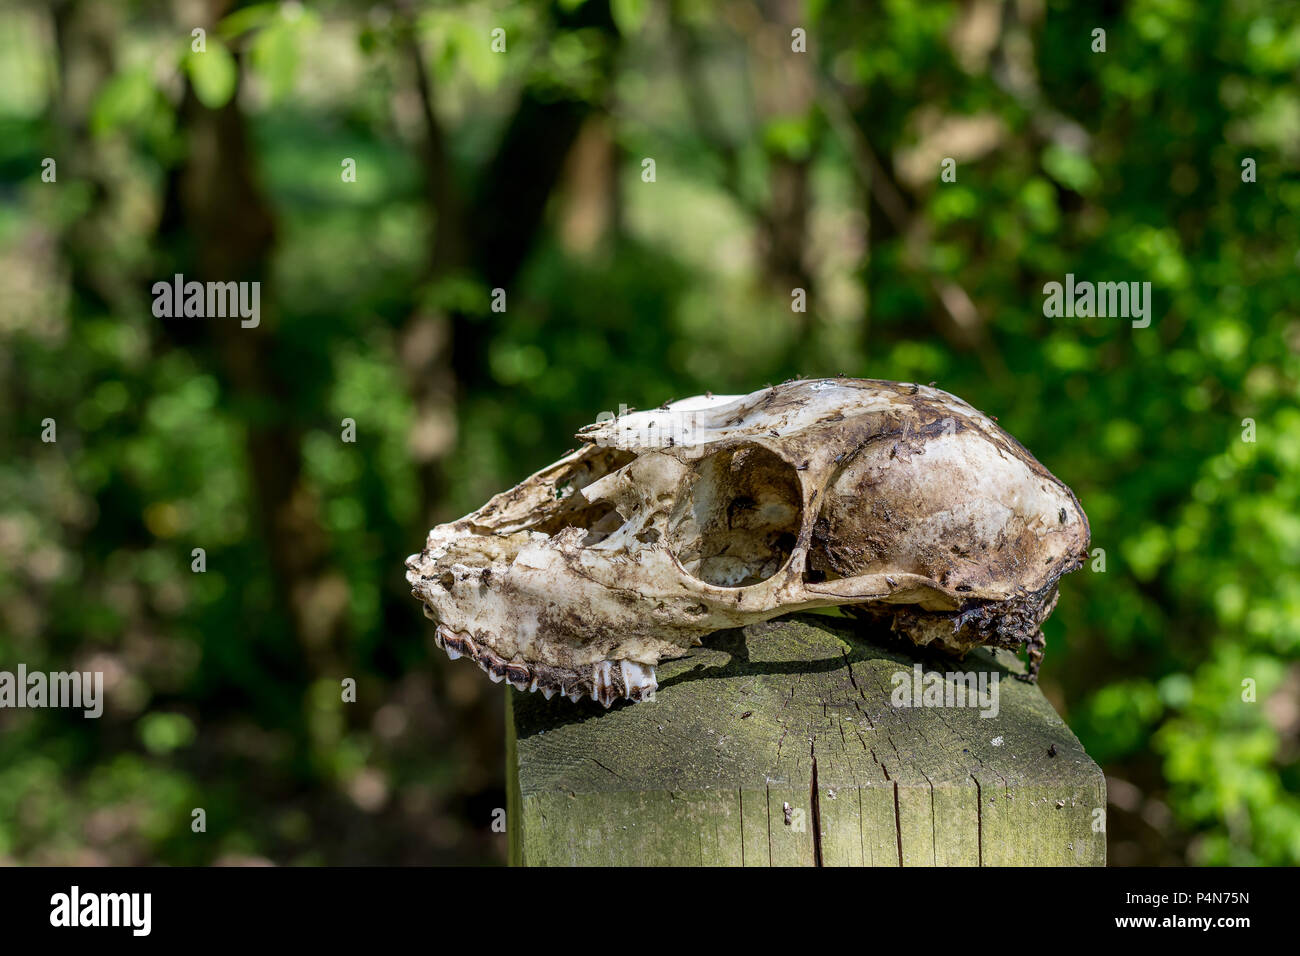 Deer skull (minus lower jawbone) balanced on fence post. Small flies on the skull. Stock Photo